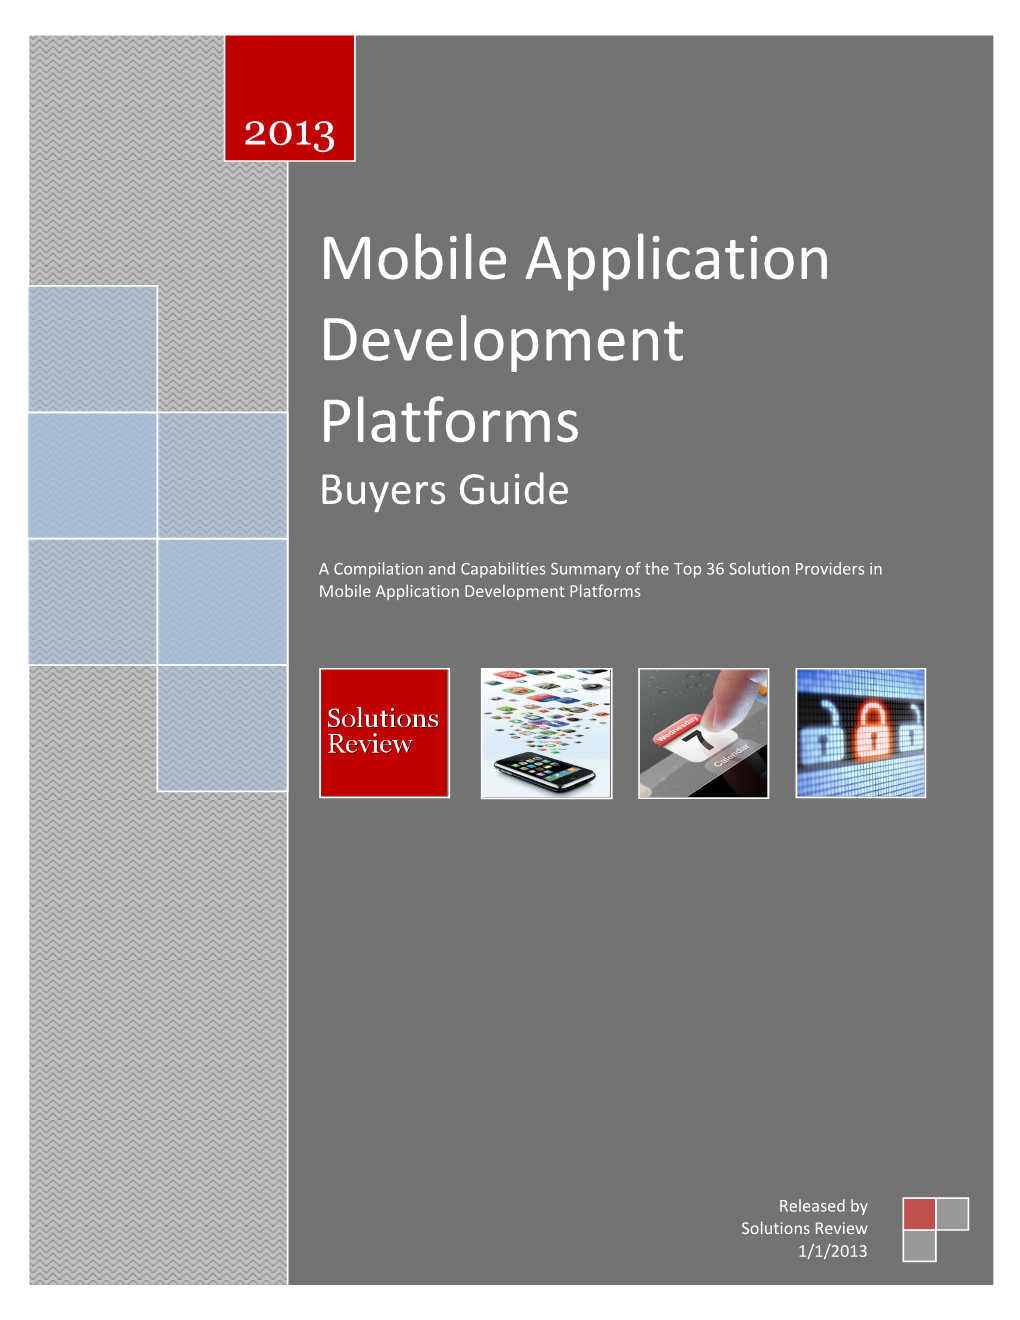 Mobile Application Development Platforms Buyers Guide